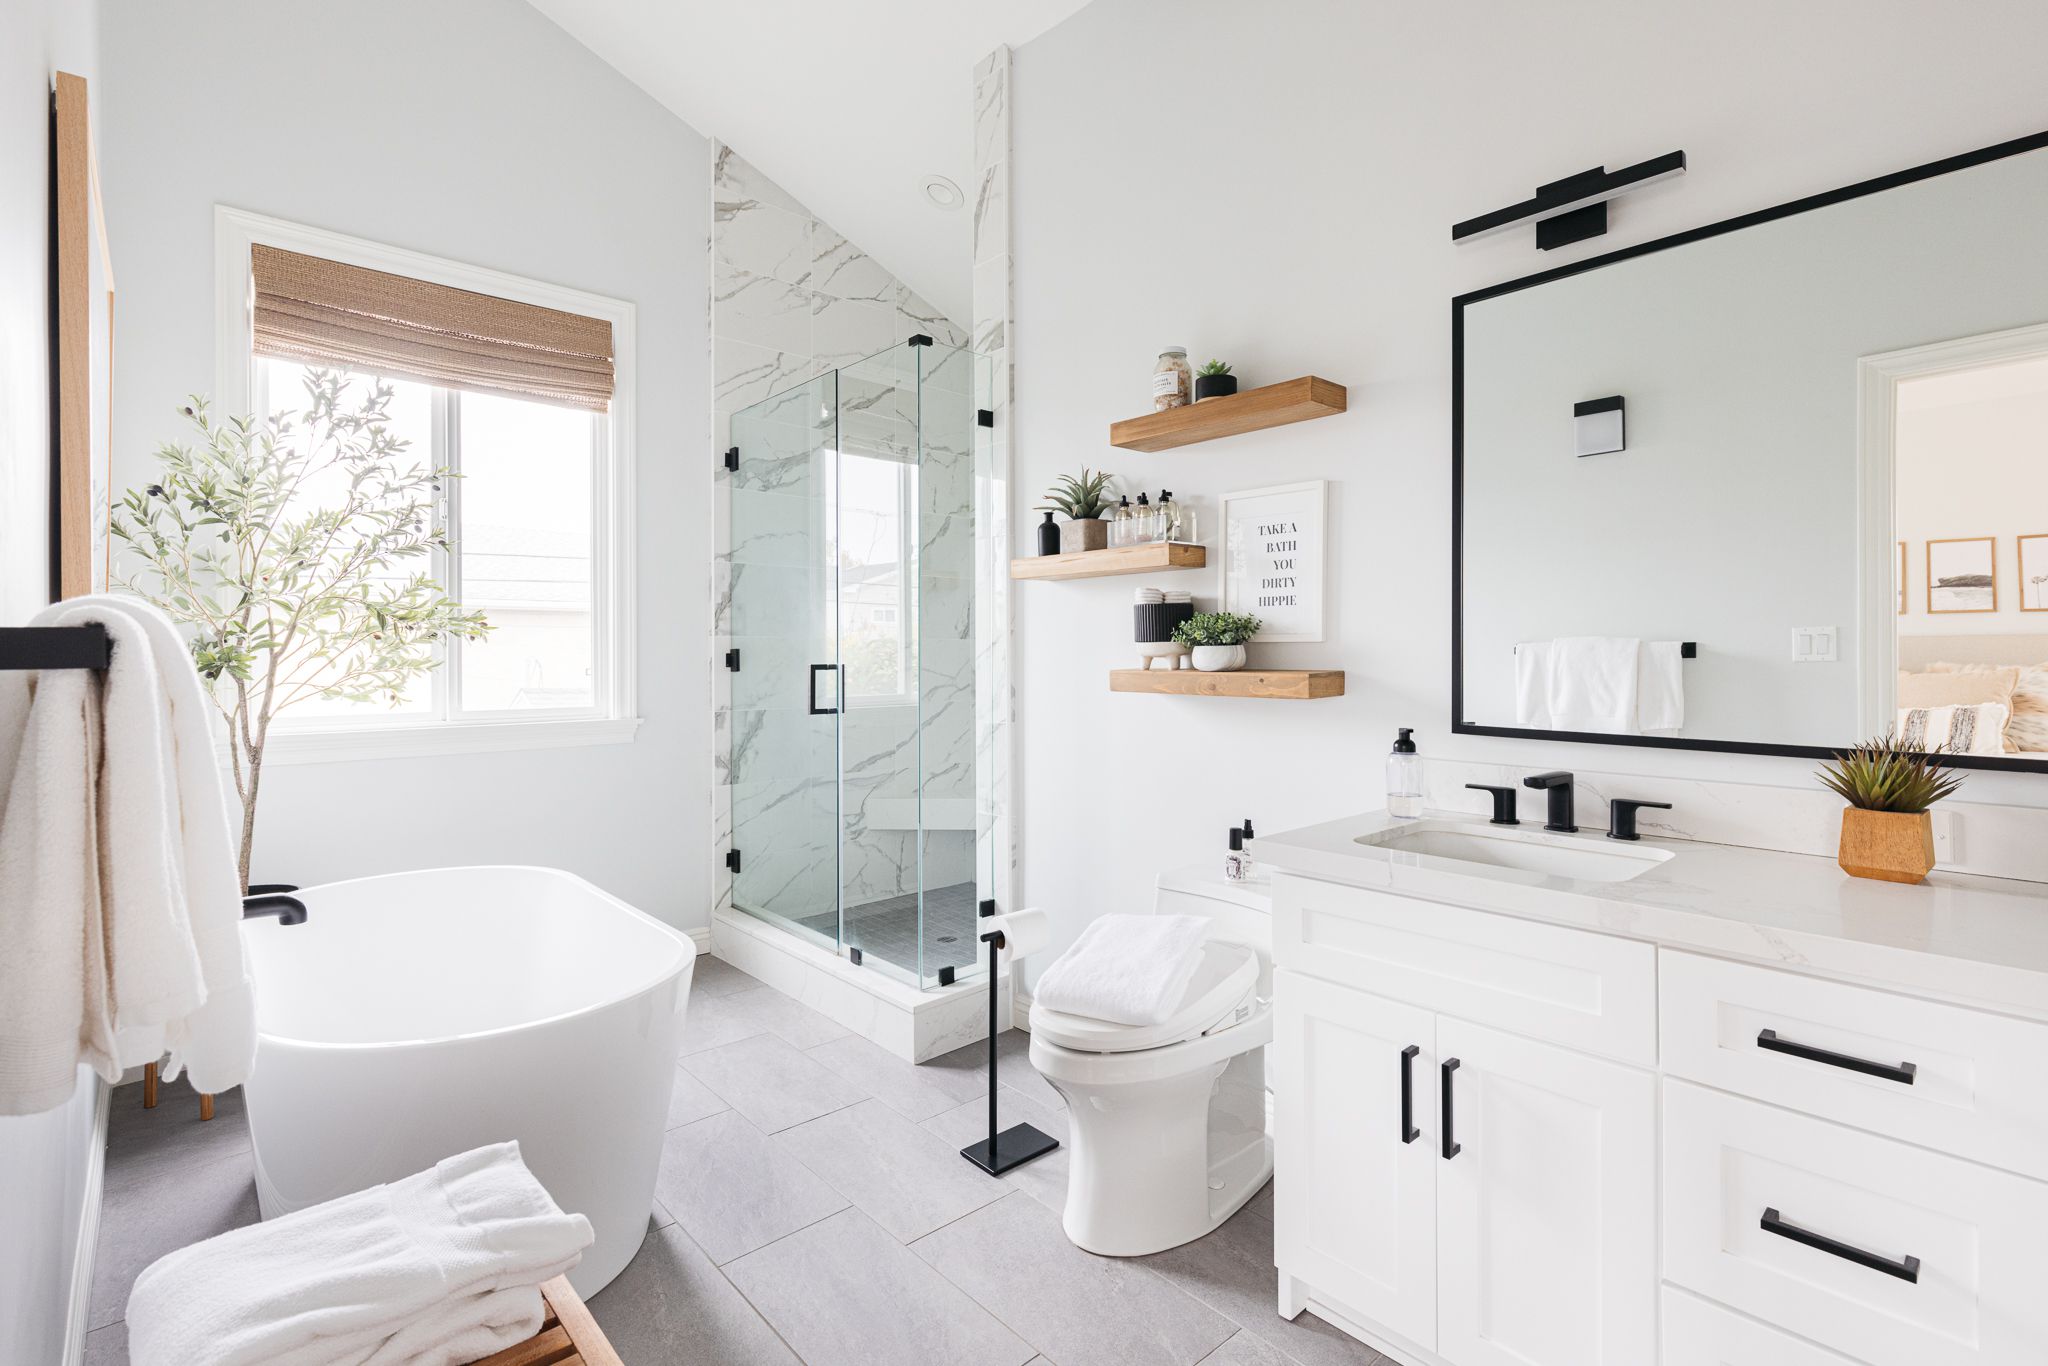 44 Primary Bathroom Design Ideas to Inspire You